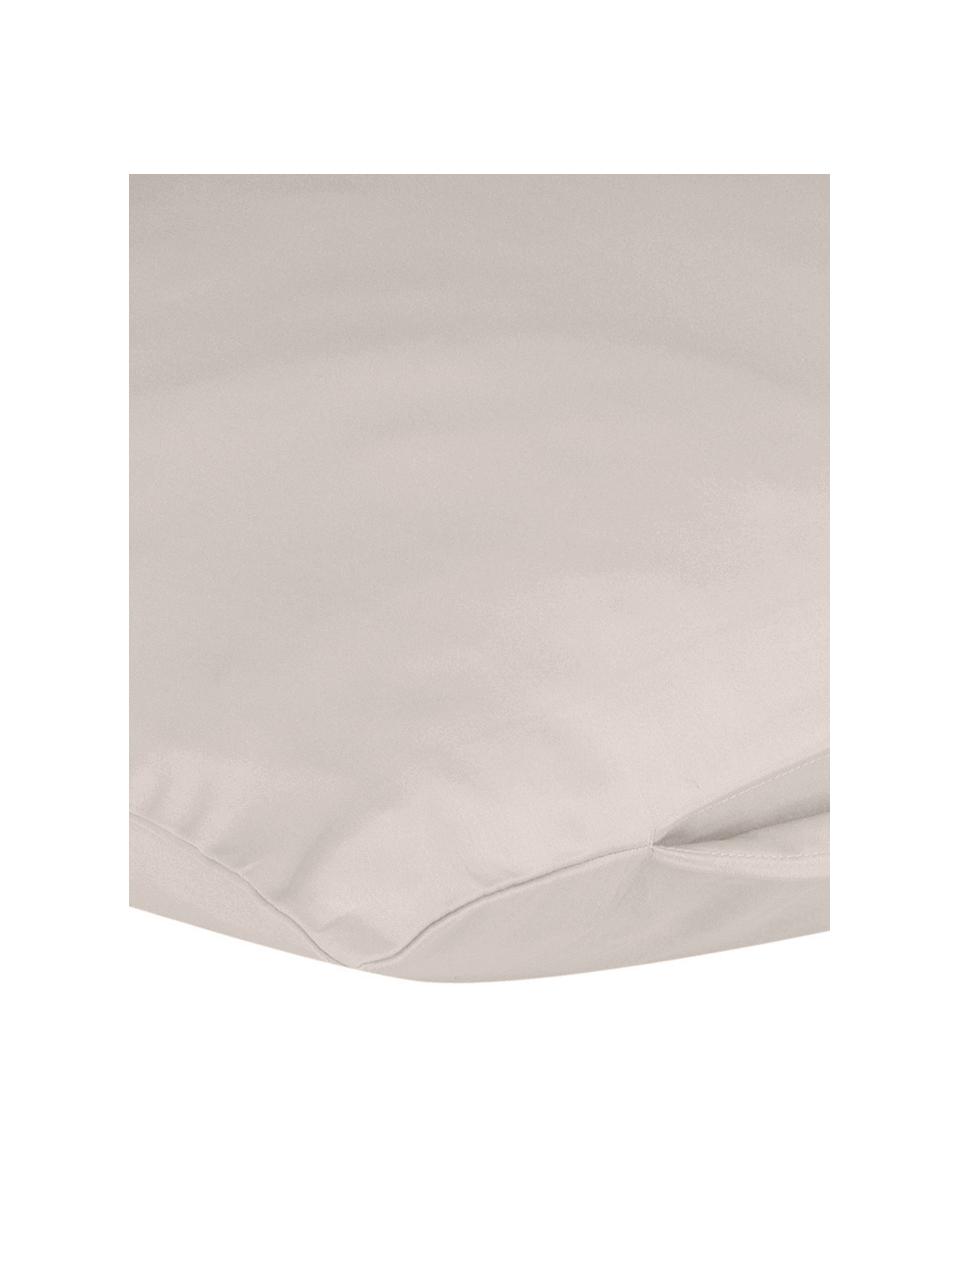 Baumwollsatin-Kissenbezug Comfort in Taupe, 50 x 70 cm, Webart: Satin, leicht glänzend Fa, Taupe, B 50 x L 70 cm